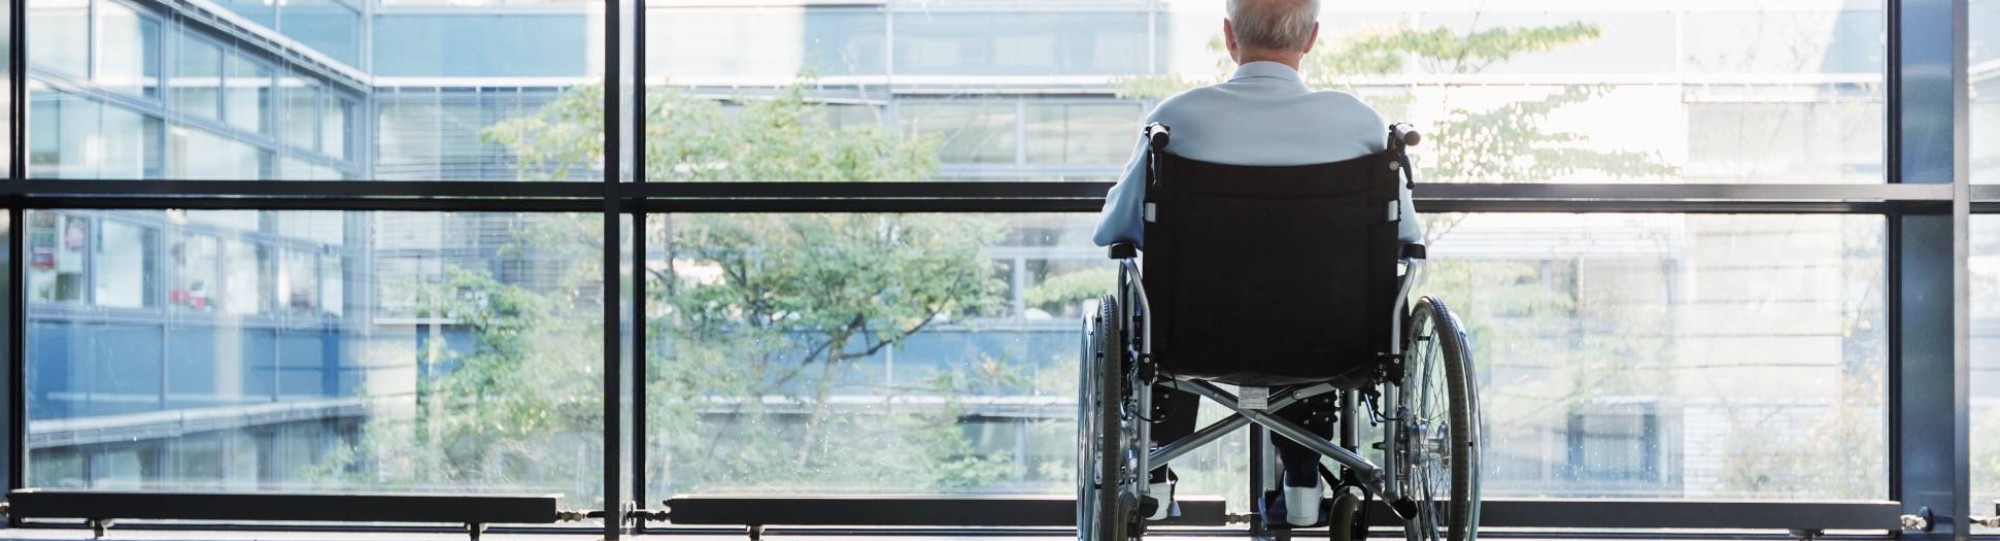 Oudere man in rolstoel alleen op de gang: is er sprake van ouderenmishandeling?